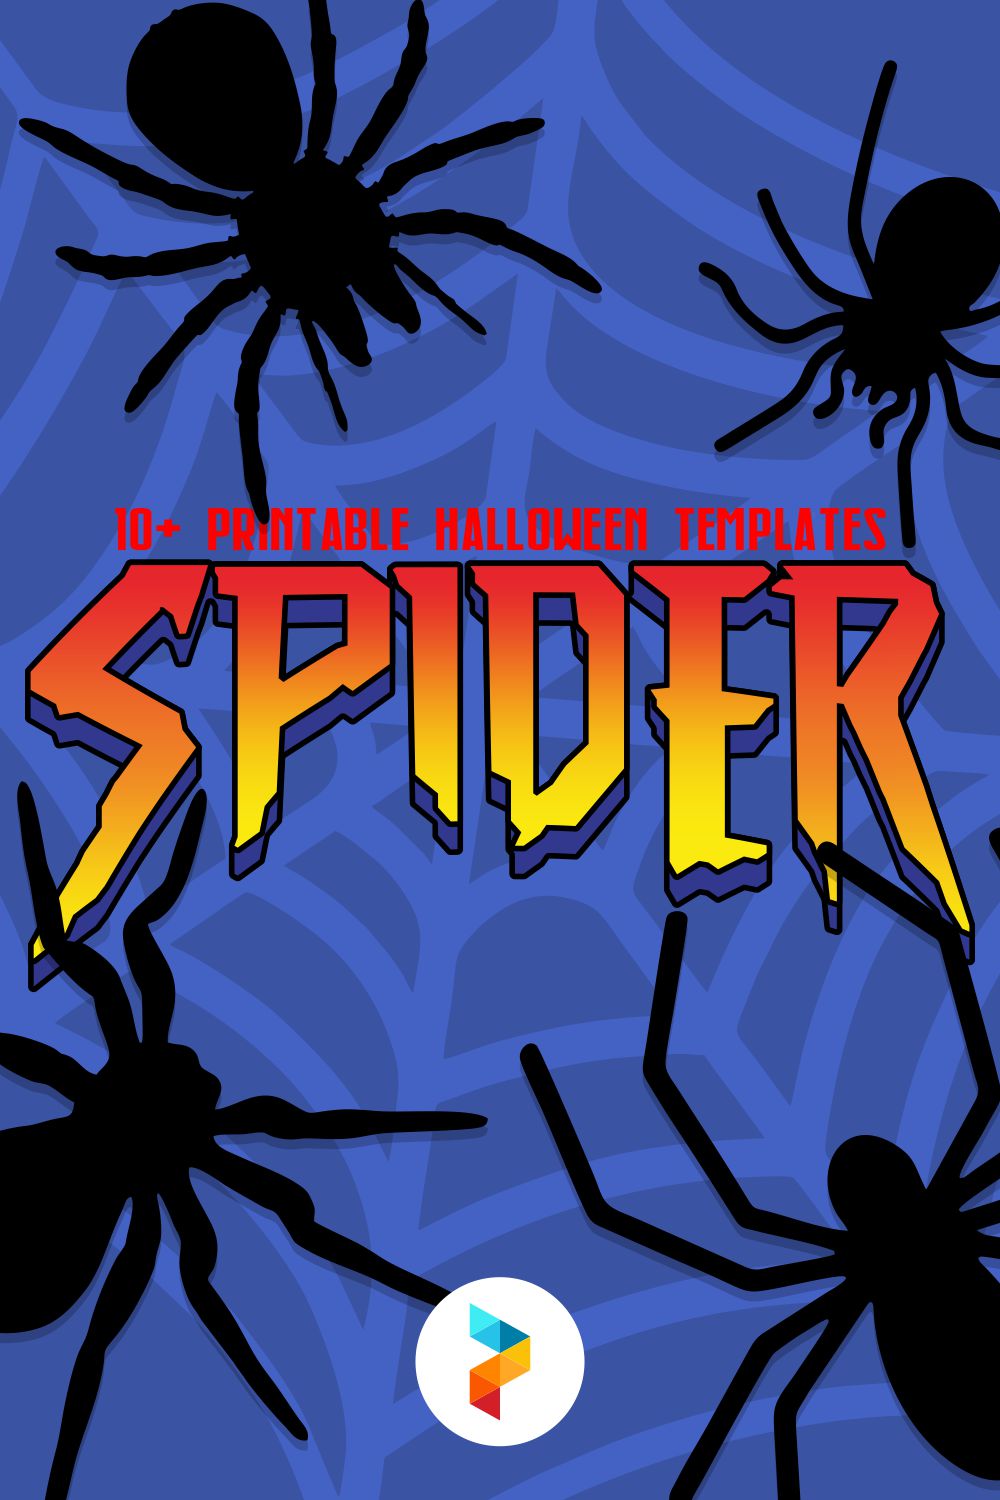 Printable Halloween Templates Spider